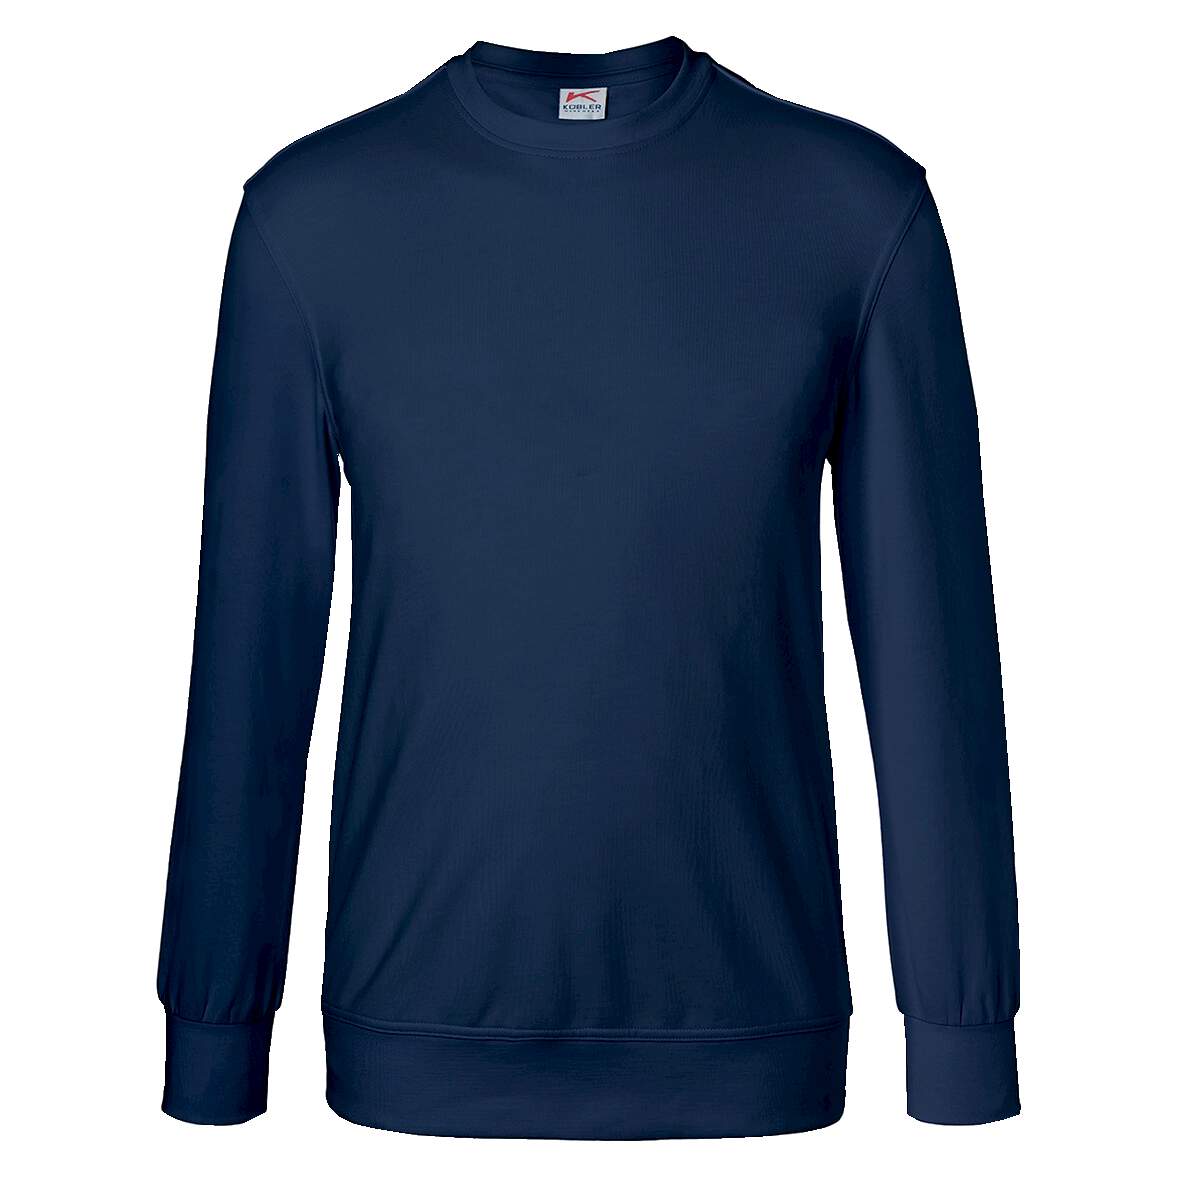 1253909 - Sweatshirt dunkelblau Gr.S 